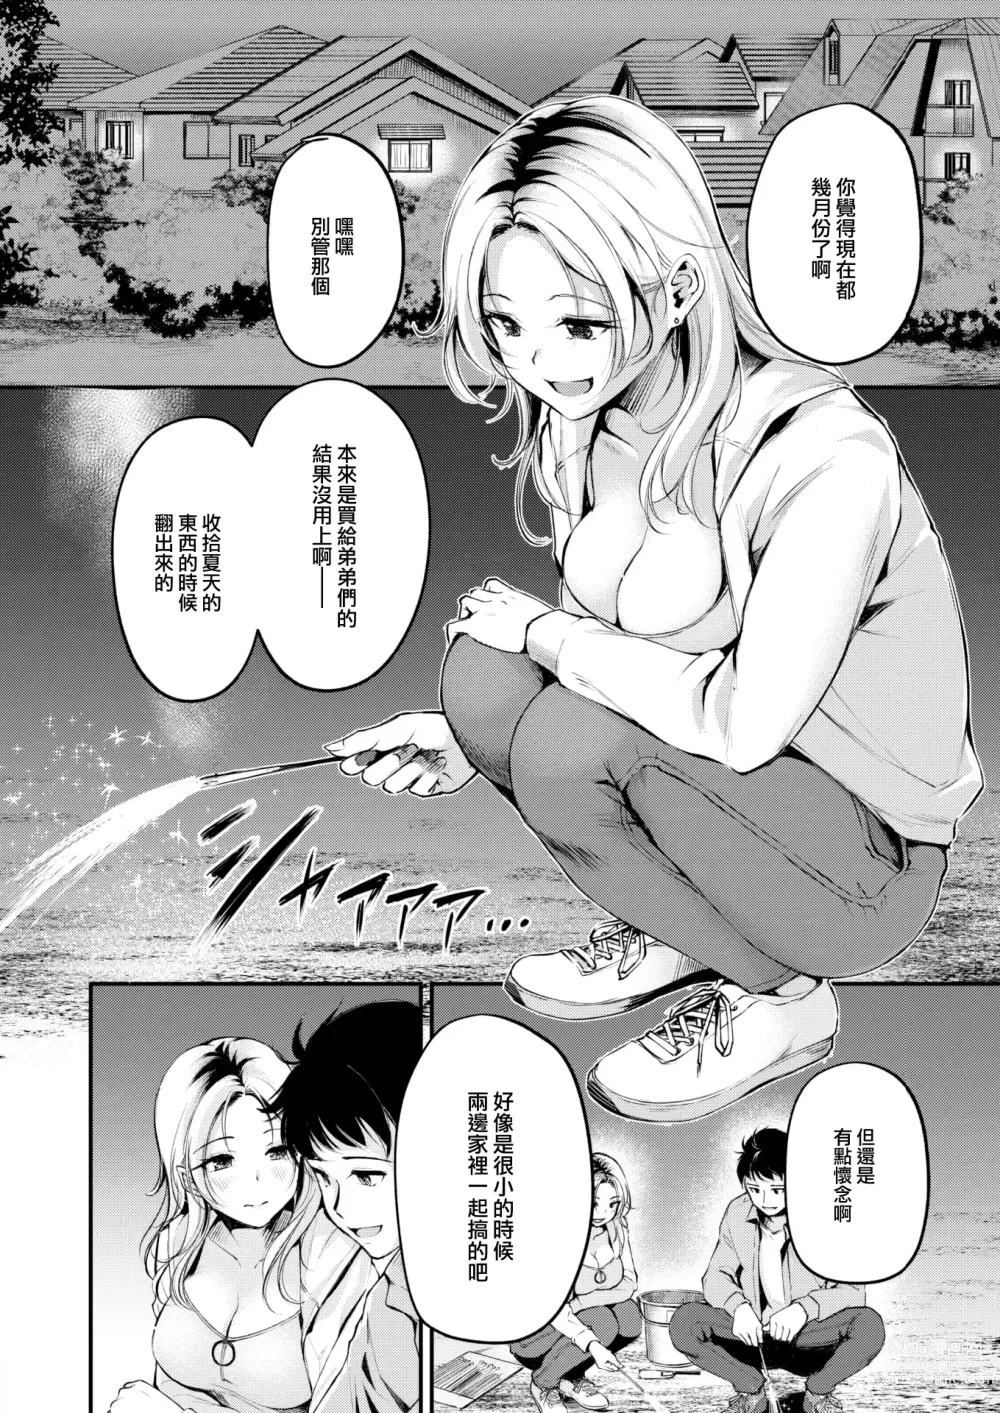 Page 3 of manga Senkou Hanabi no Koi